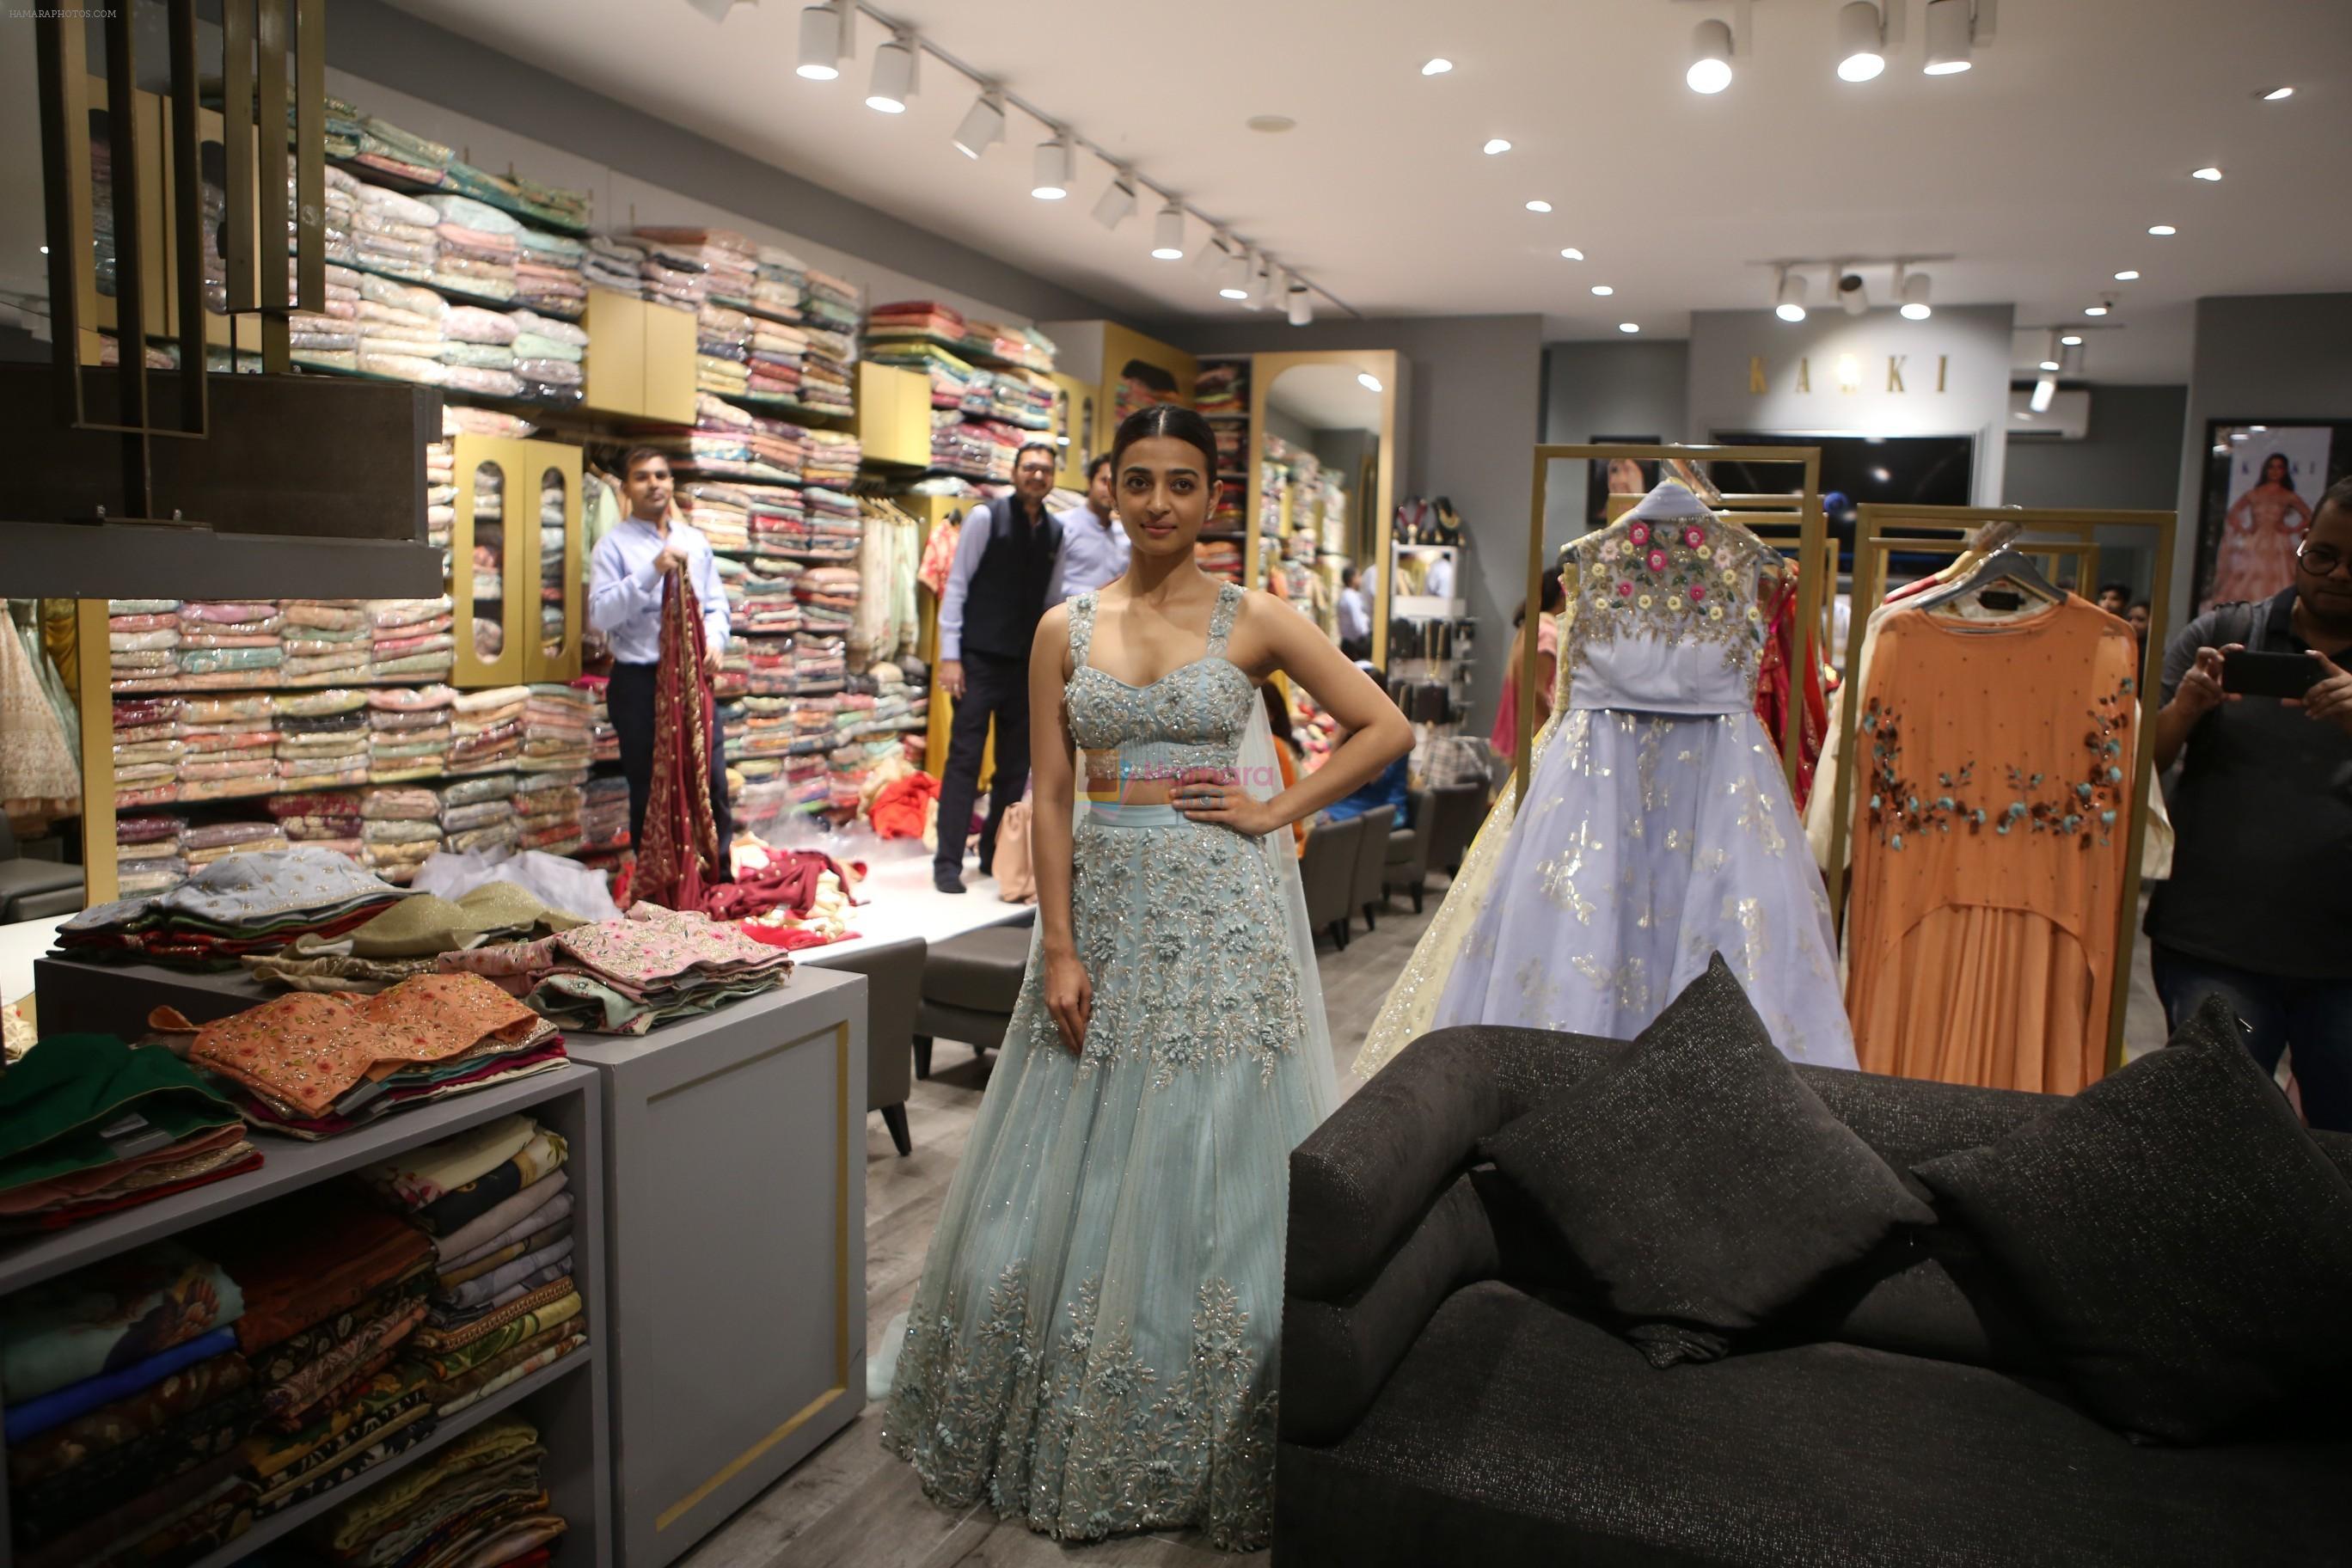 Radhika Apte at launch of Tanya Ghavri fashion collection at Kalki in Santacruz on 29th Aug 2018